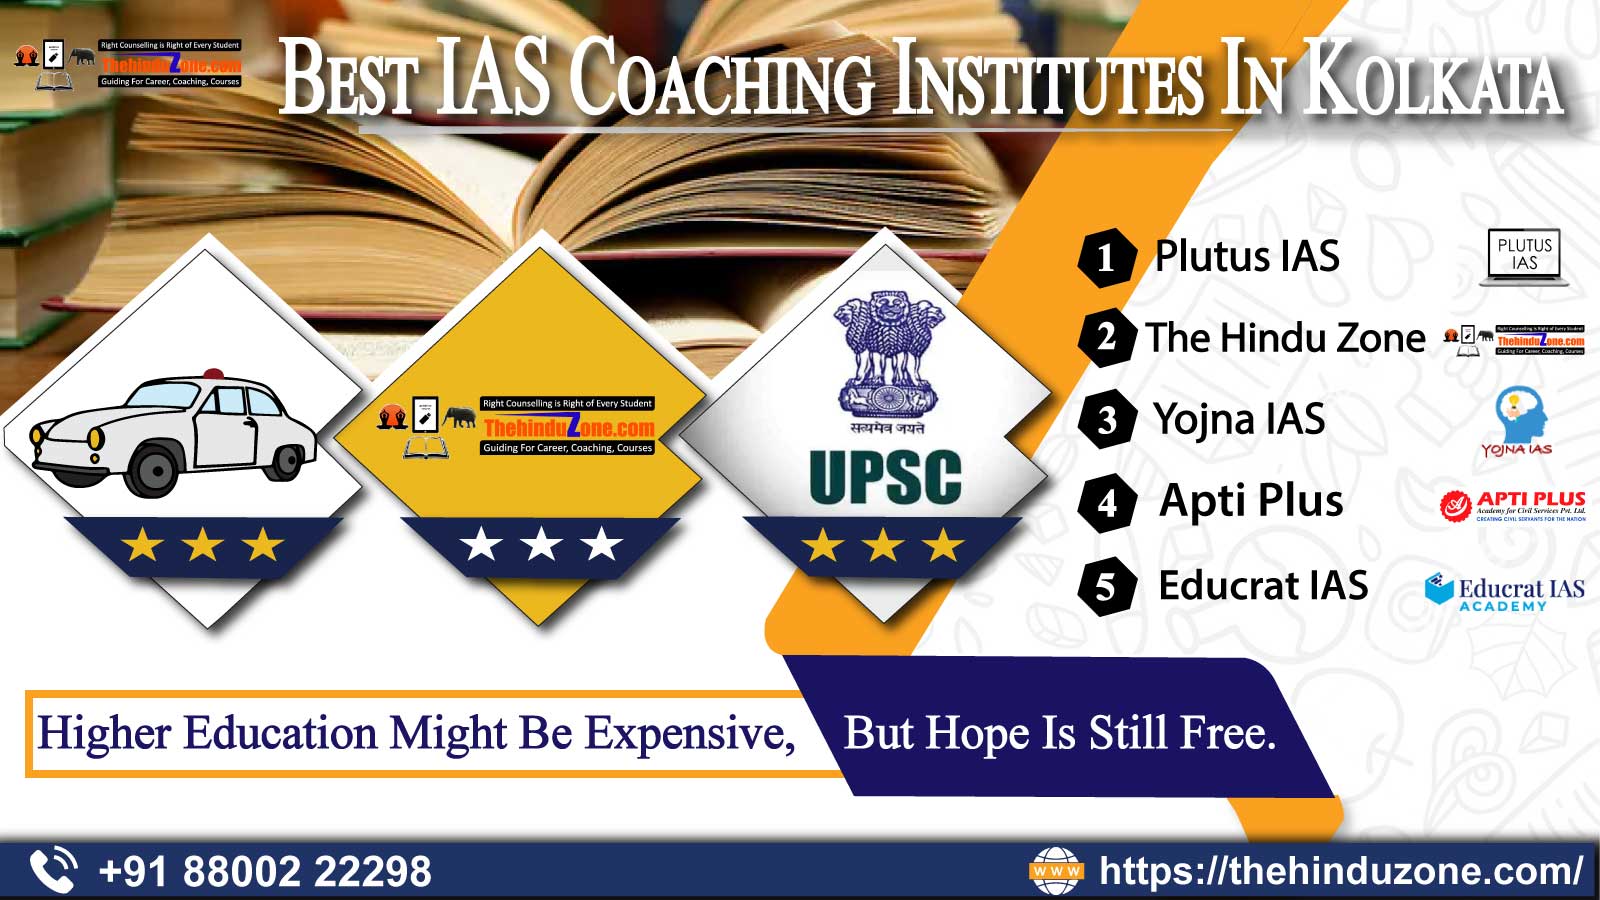 Top 10 IAS Coaching Institutes In Kolkata